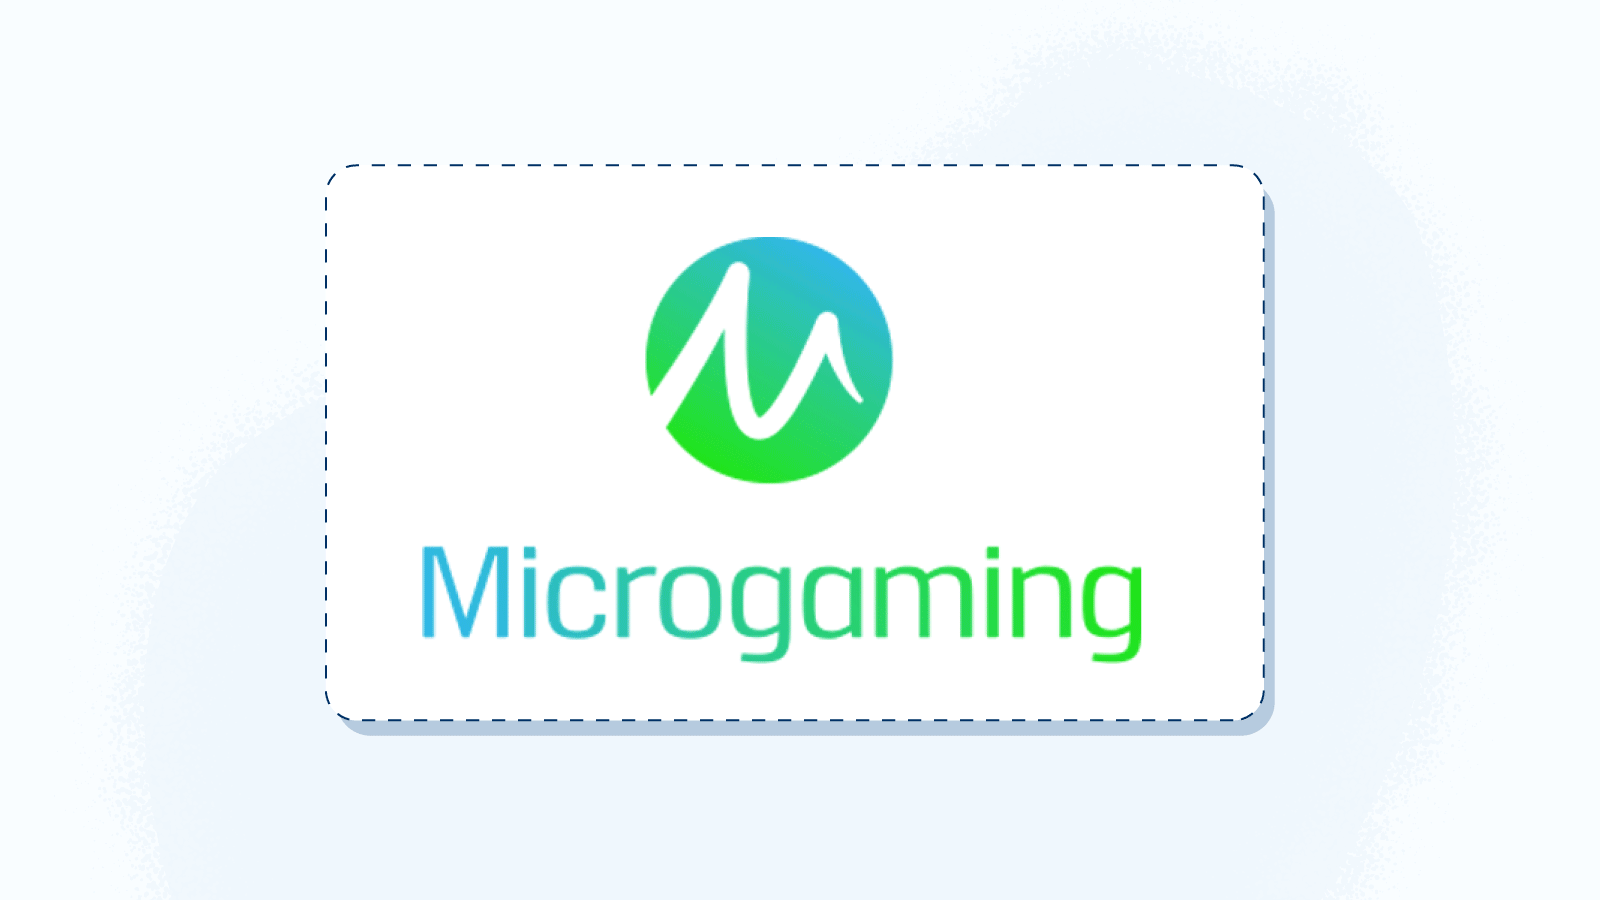 #1. Microgaming